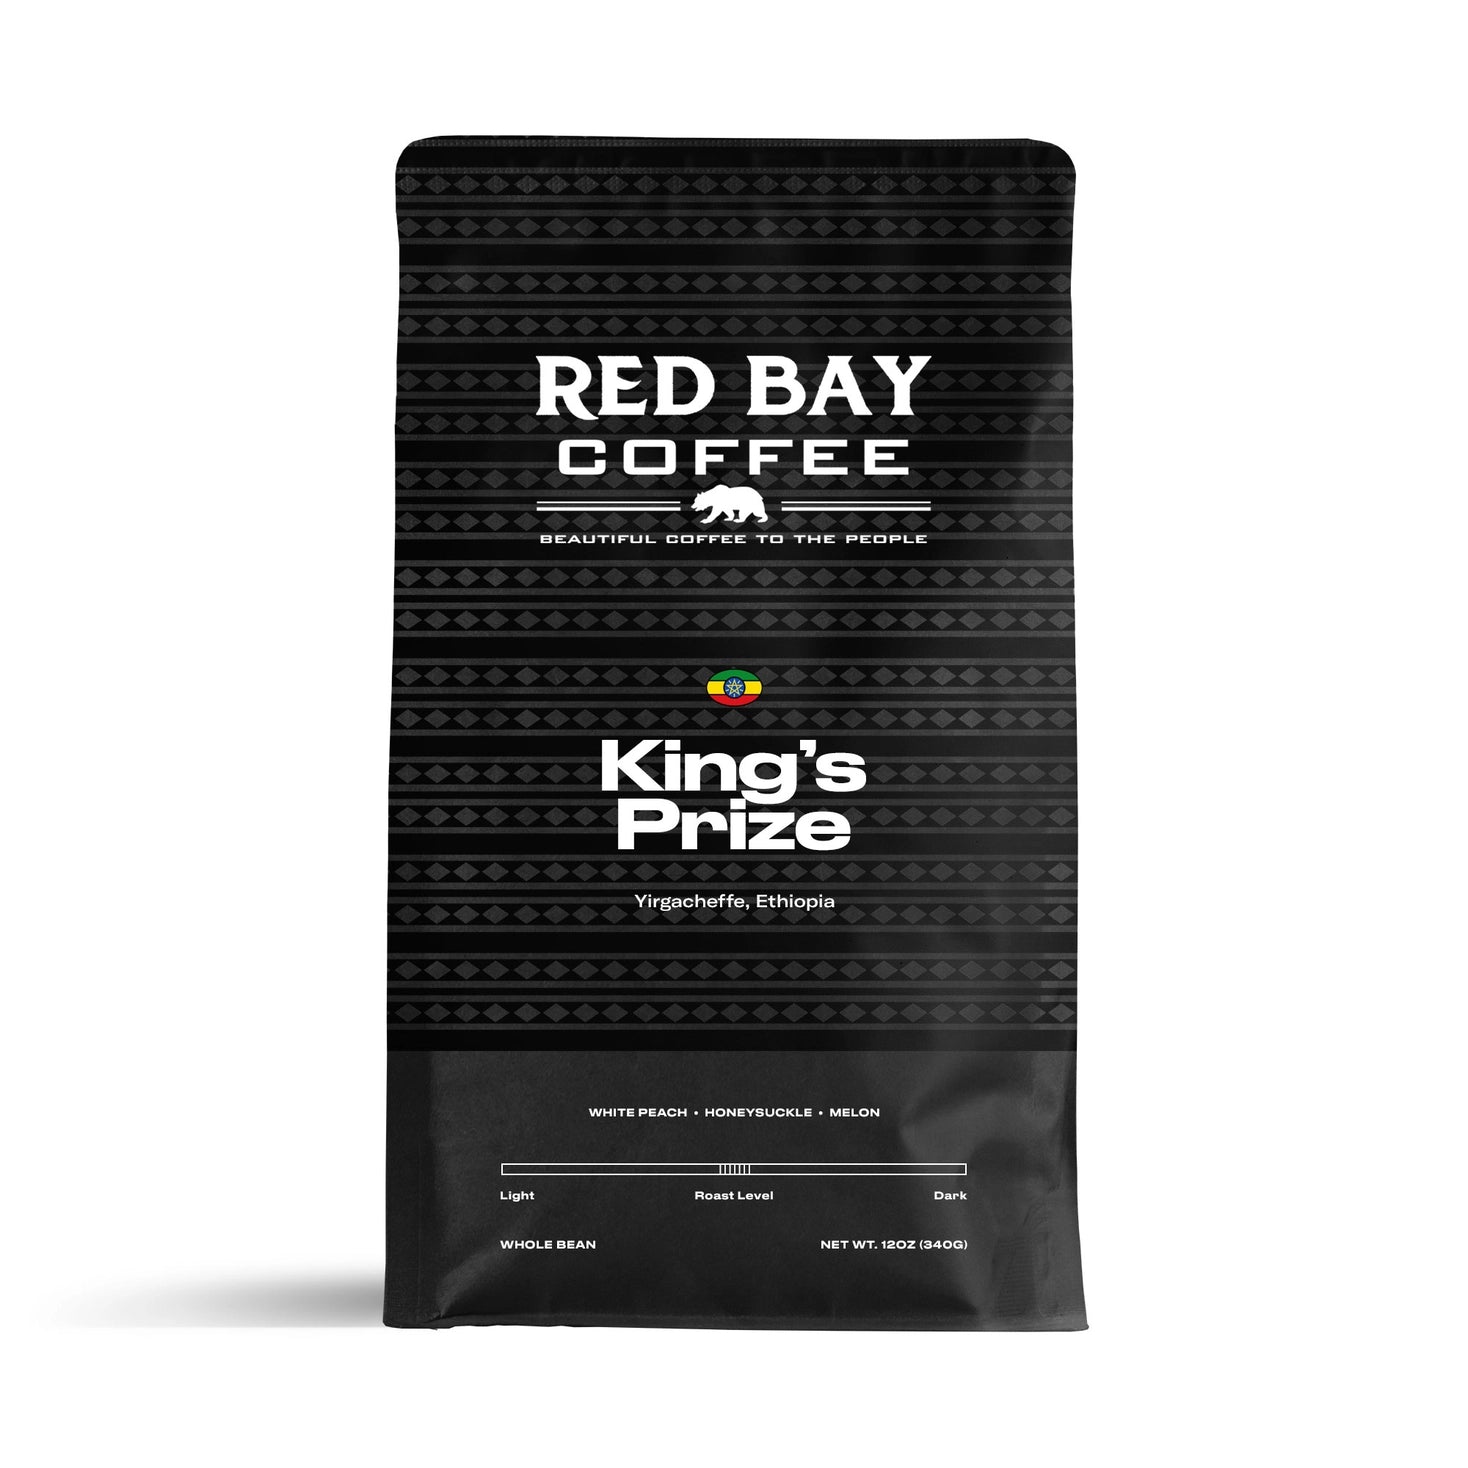 Red Bay Coffee, King's Prize Medium Roast Coffee